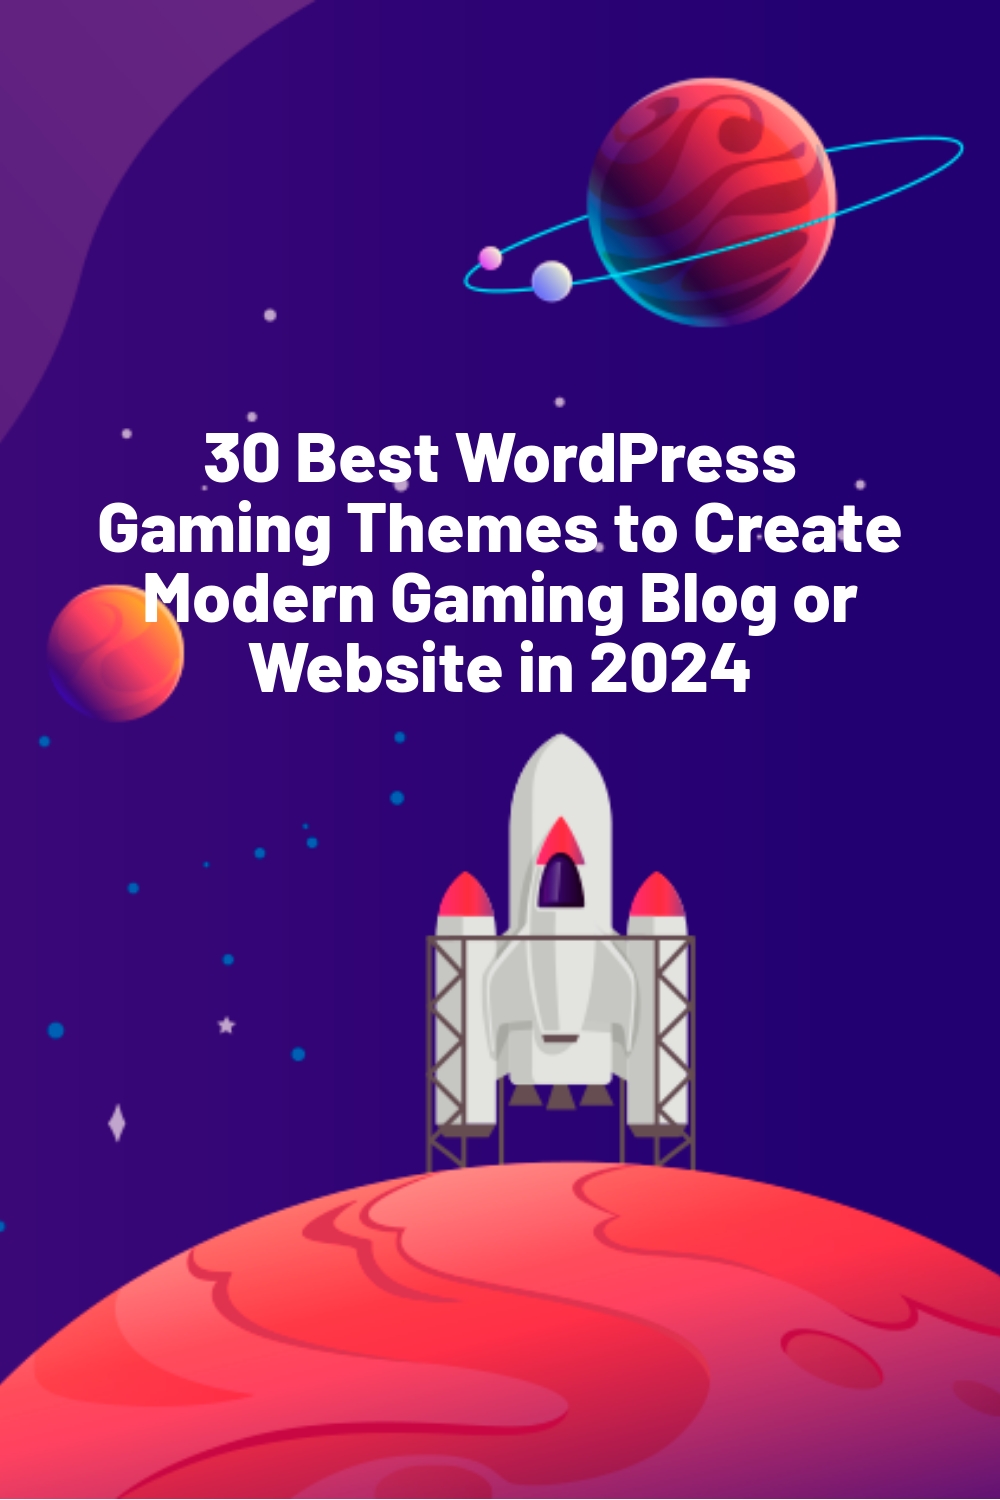 30 Best WordPress Gaming Themes to Create Modern Gaming Blog or Website in 2024